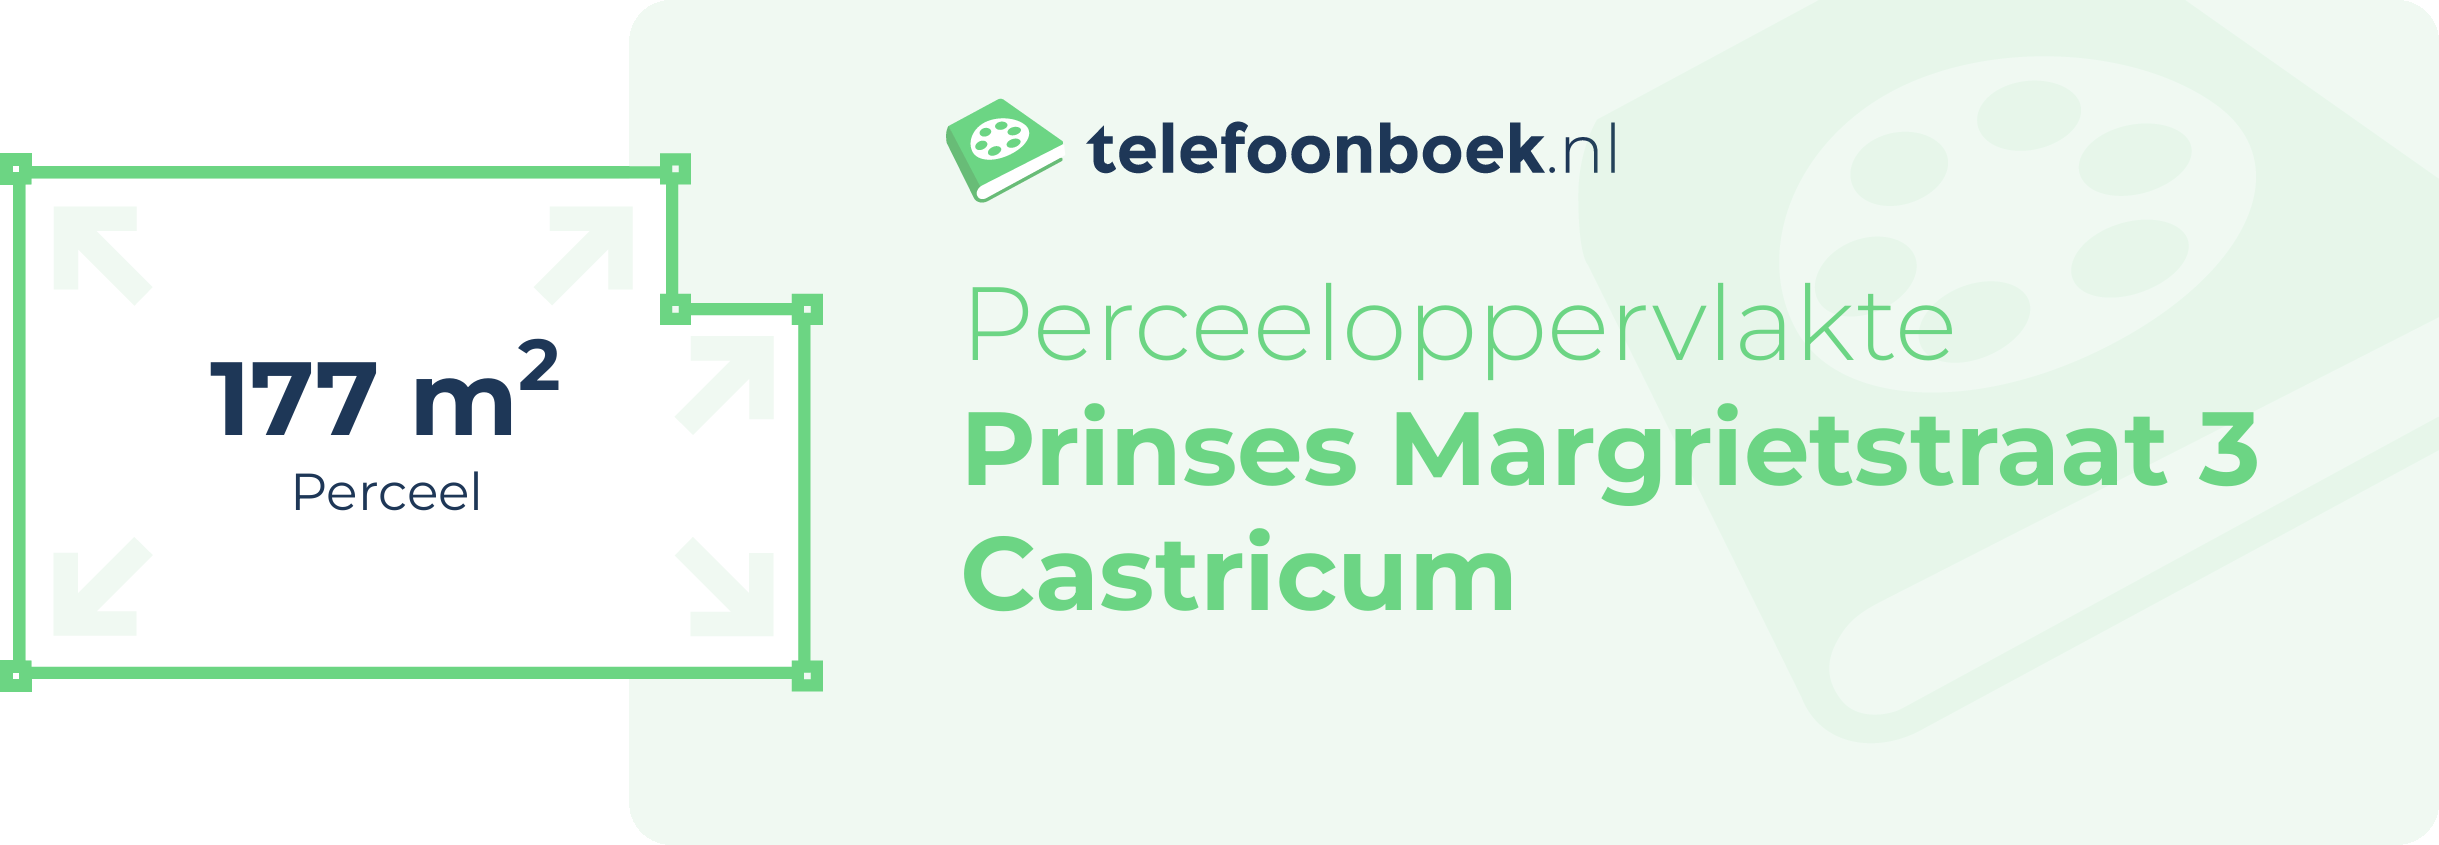 Perceeloppervlakte Prinses Margrietstraat 3 Castricum